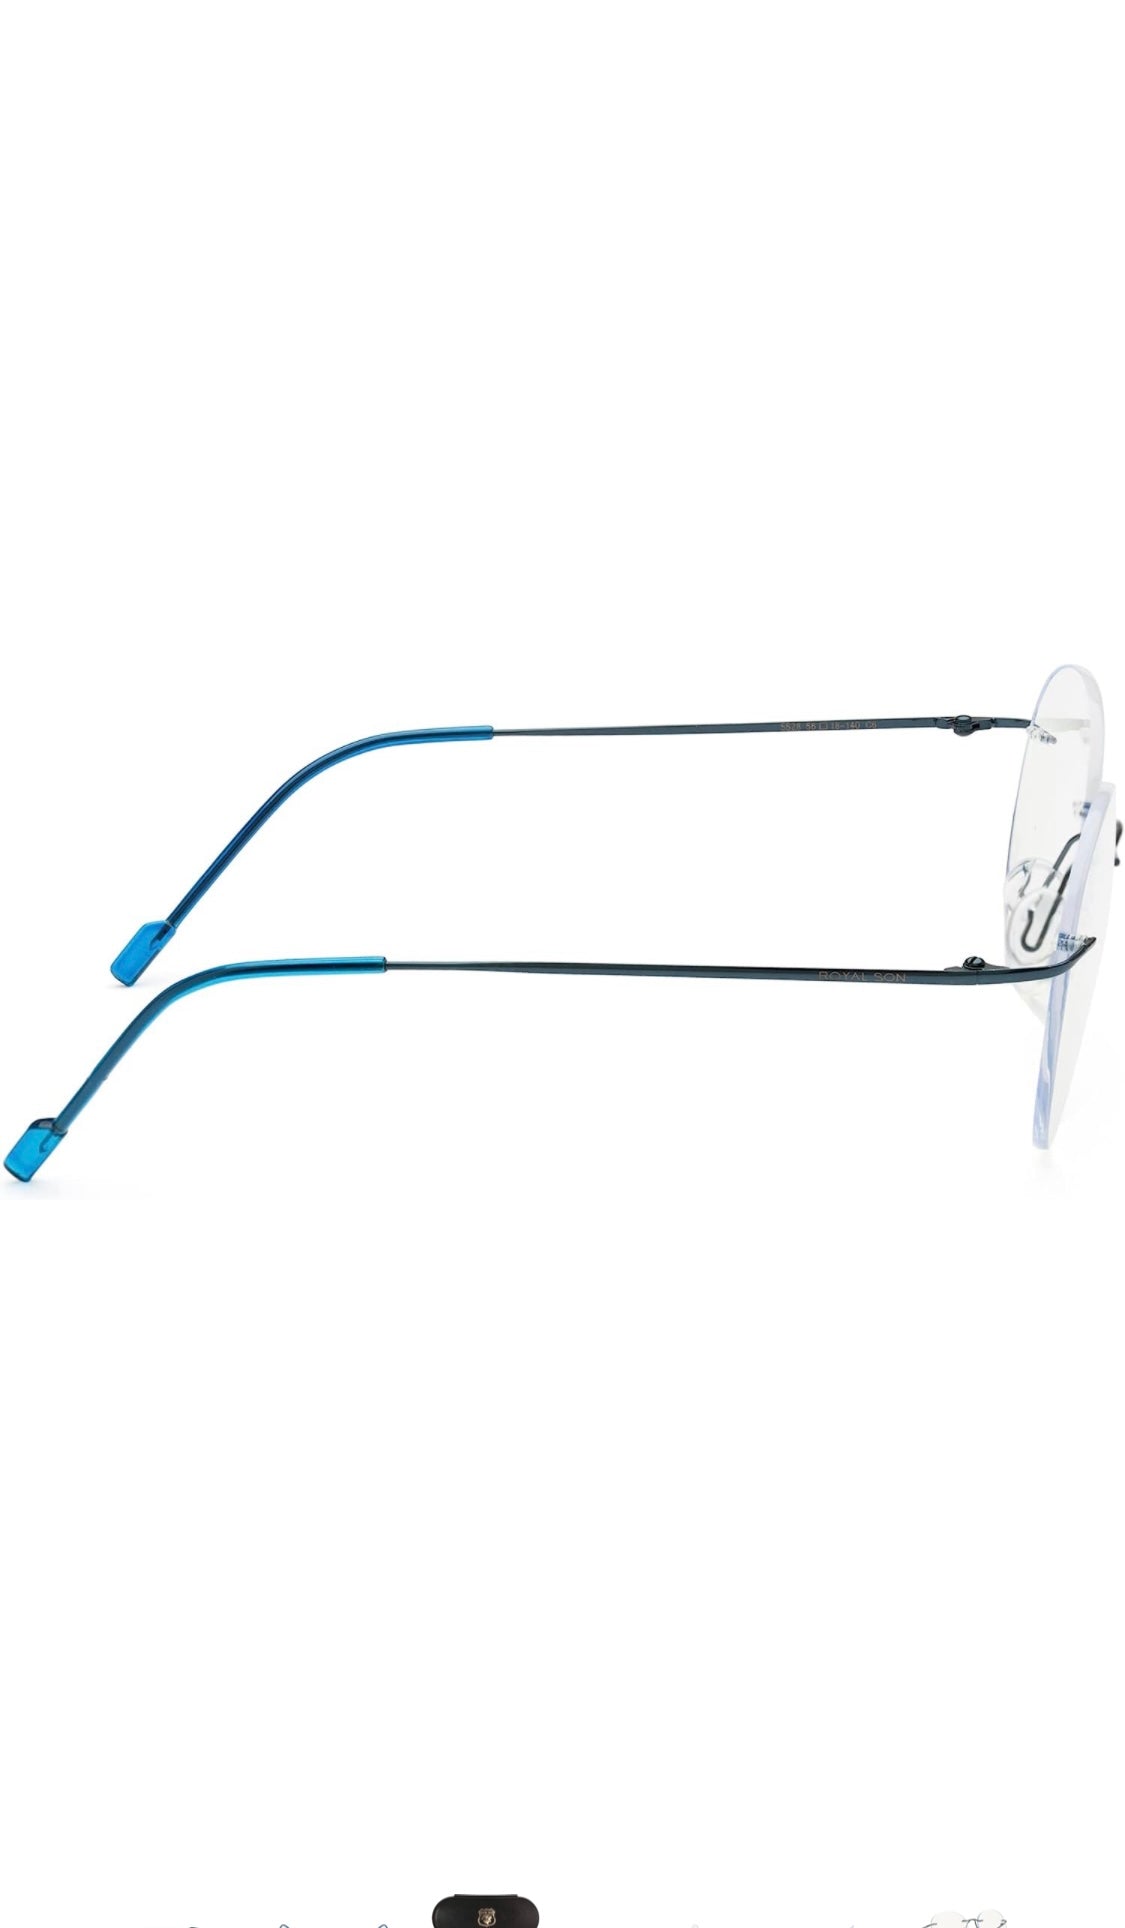 Jodykoes® Rimless Round Frame Zero Power Anti Glare Spectacle For Men and Women | Unisex Computer Eyeglasses Light Weight Round Frameless Eyewear (Blue) - Jodykoes ®